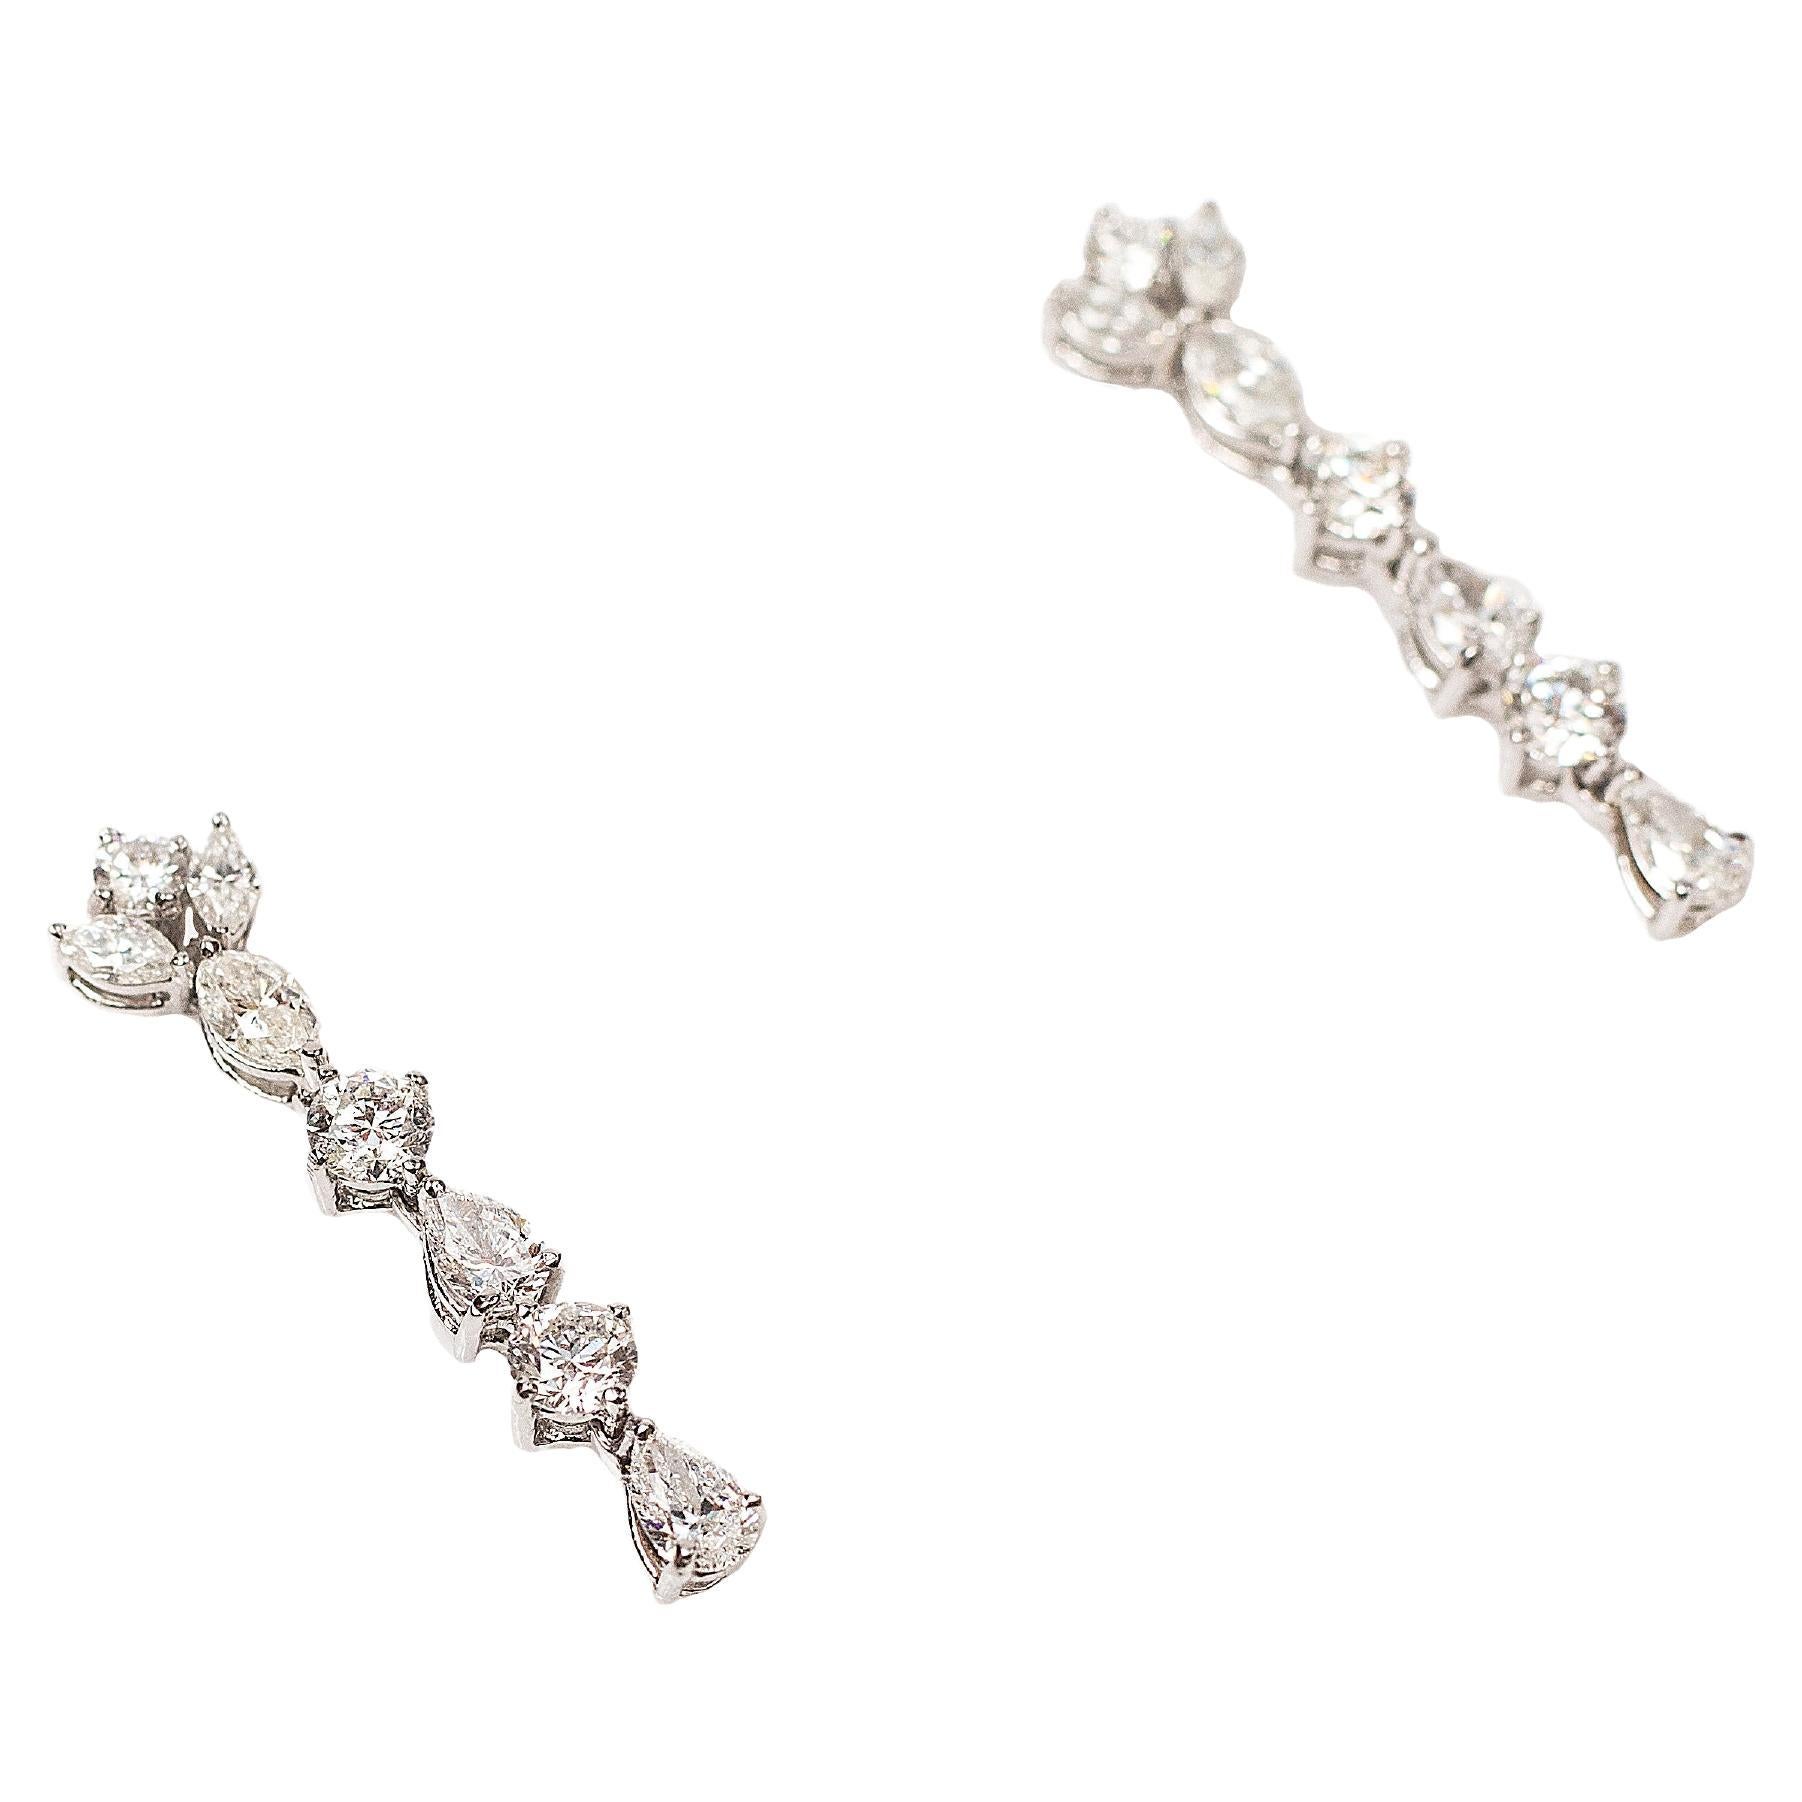 4.47 cts Diamond Earrings in 18K Gold For Sale